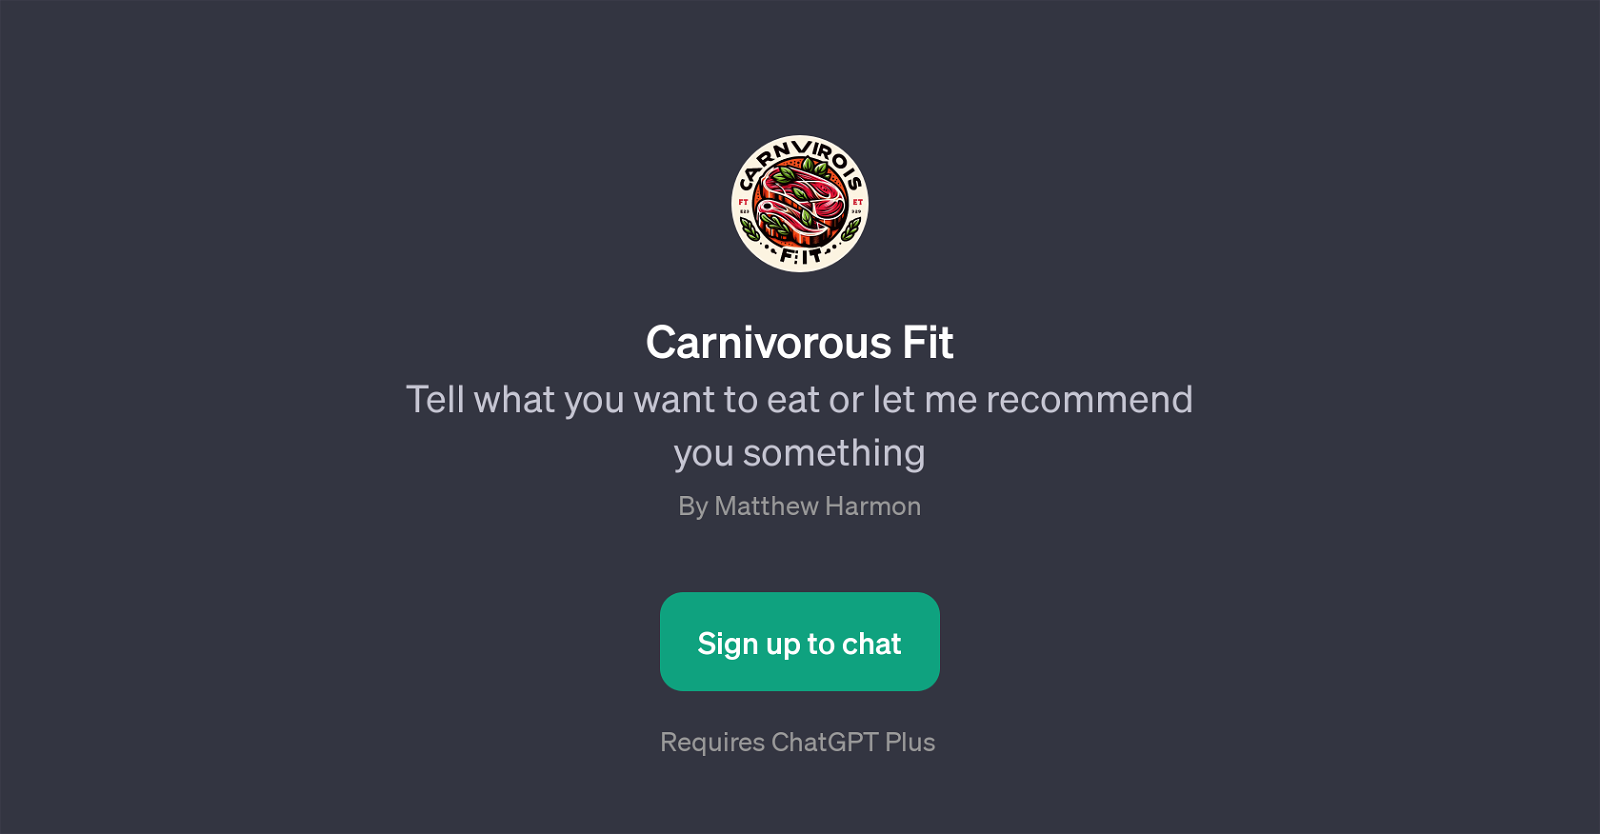 Carnivorous Fit website